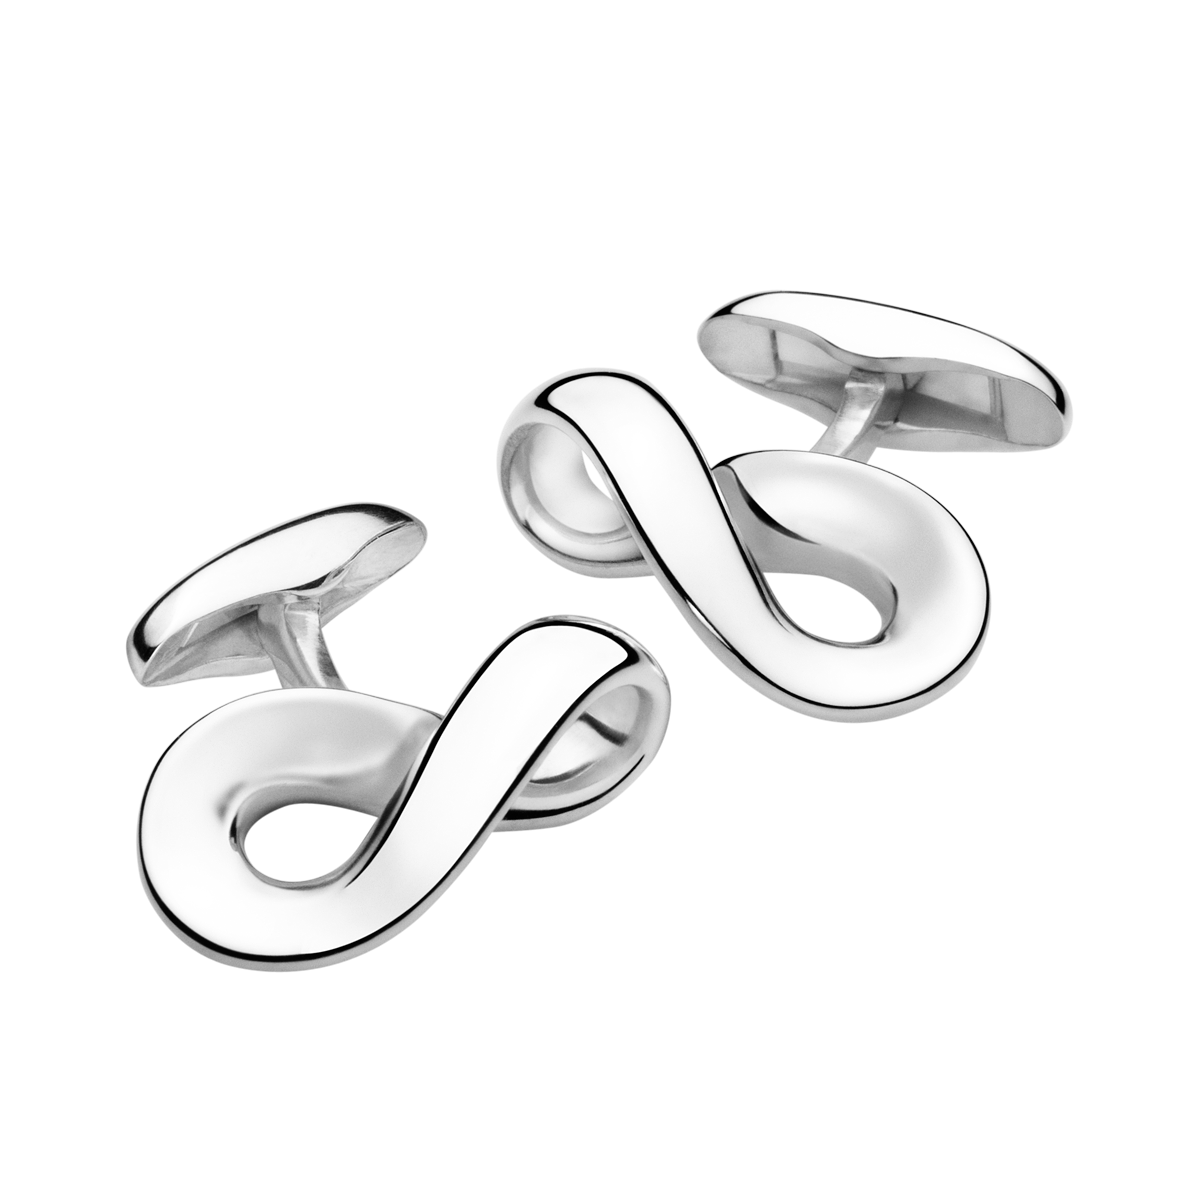 Infinity designer silver cufflinks for men   Georg Jensen